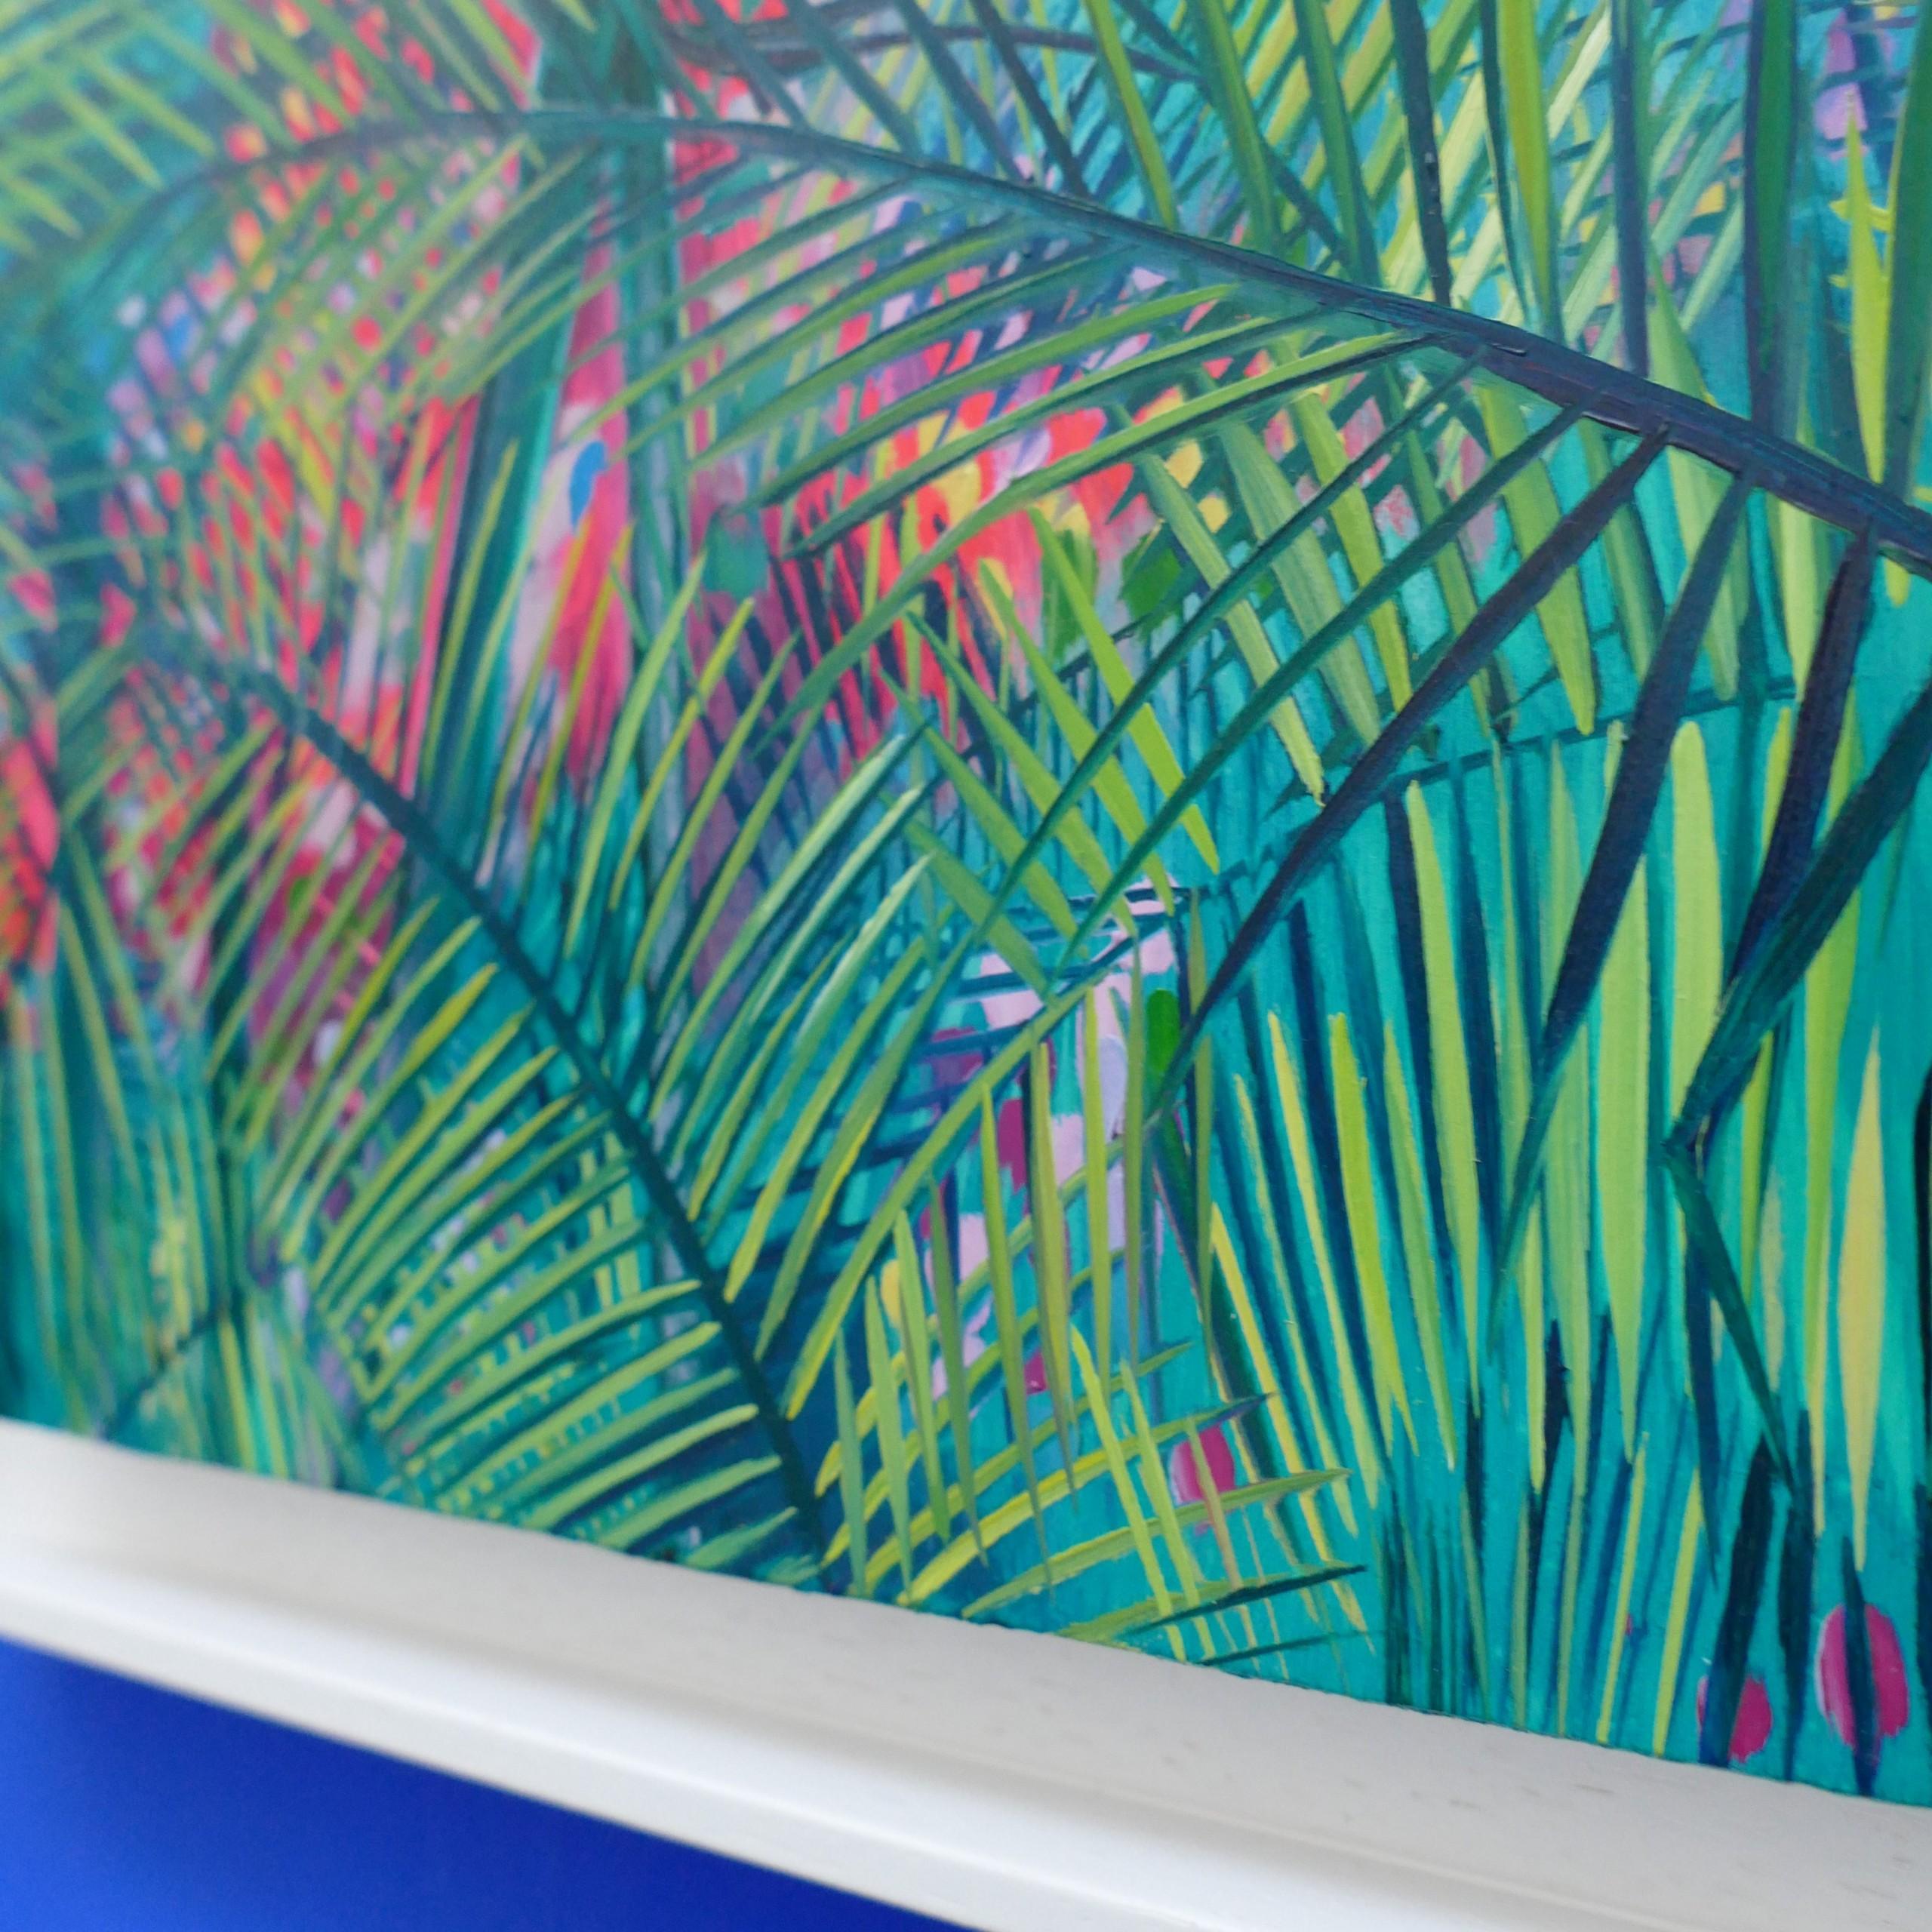 Tropical Garden VIII - Painting by Alanna Eakin